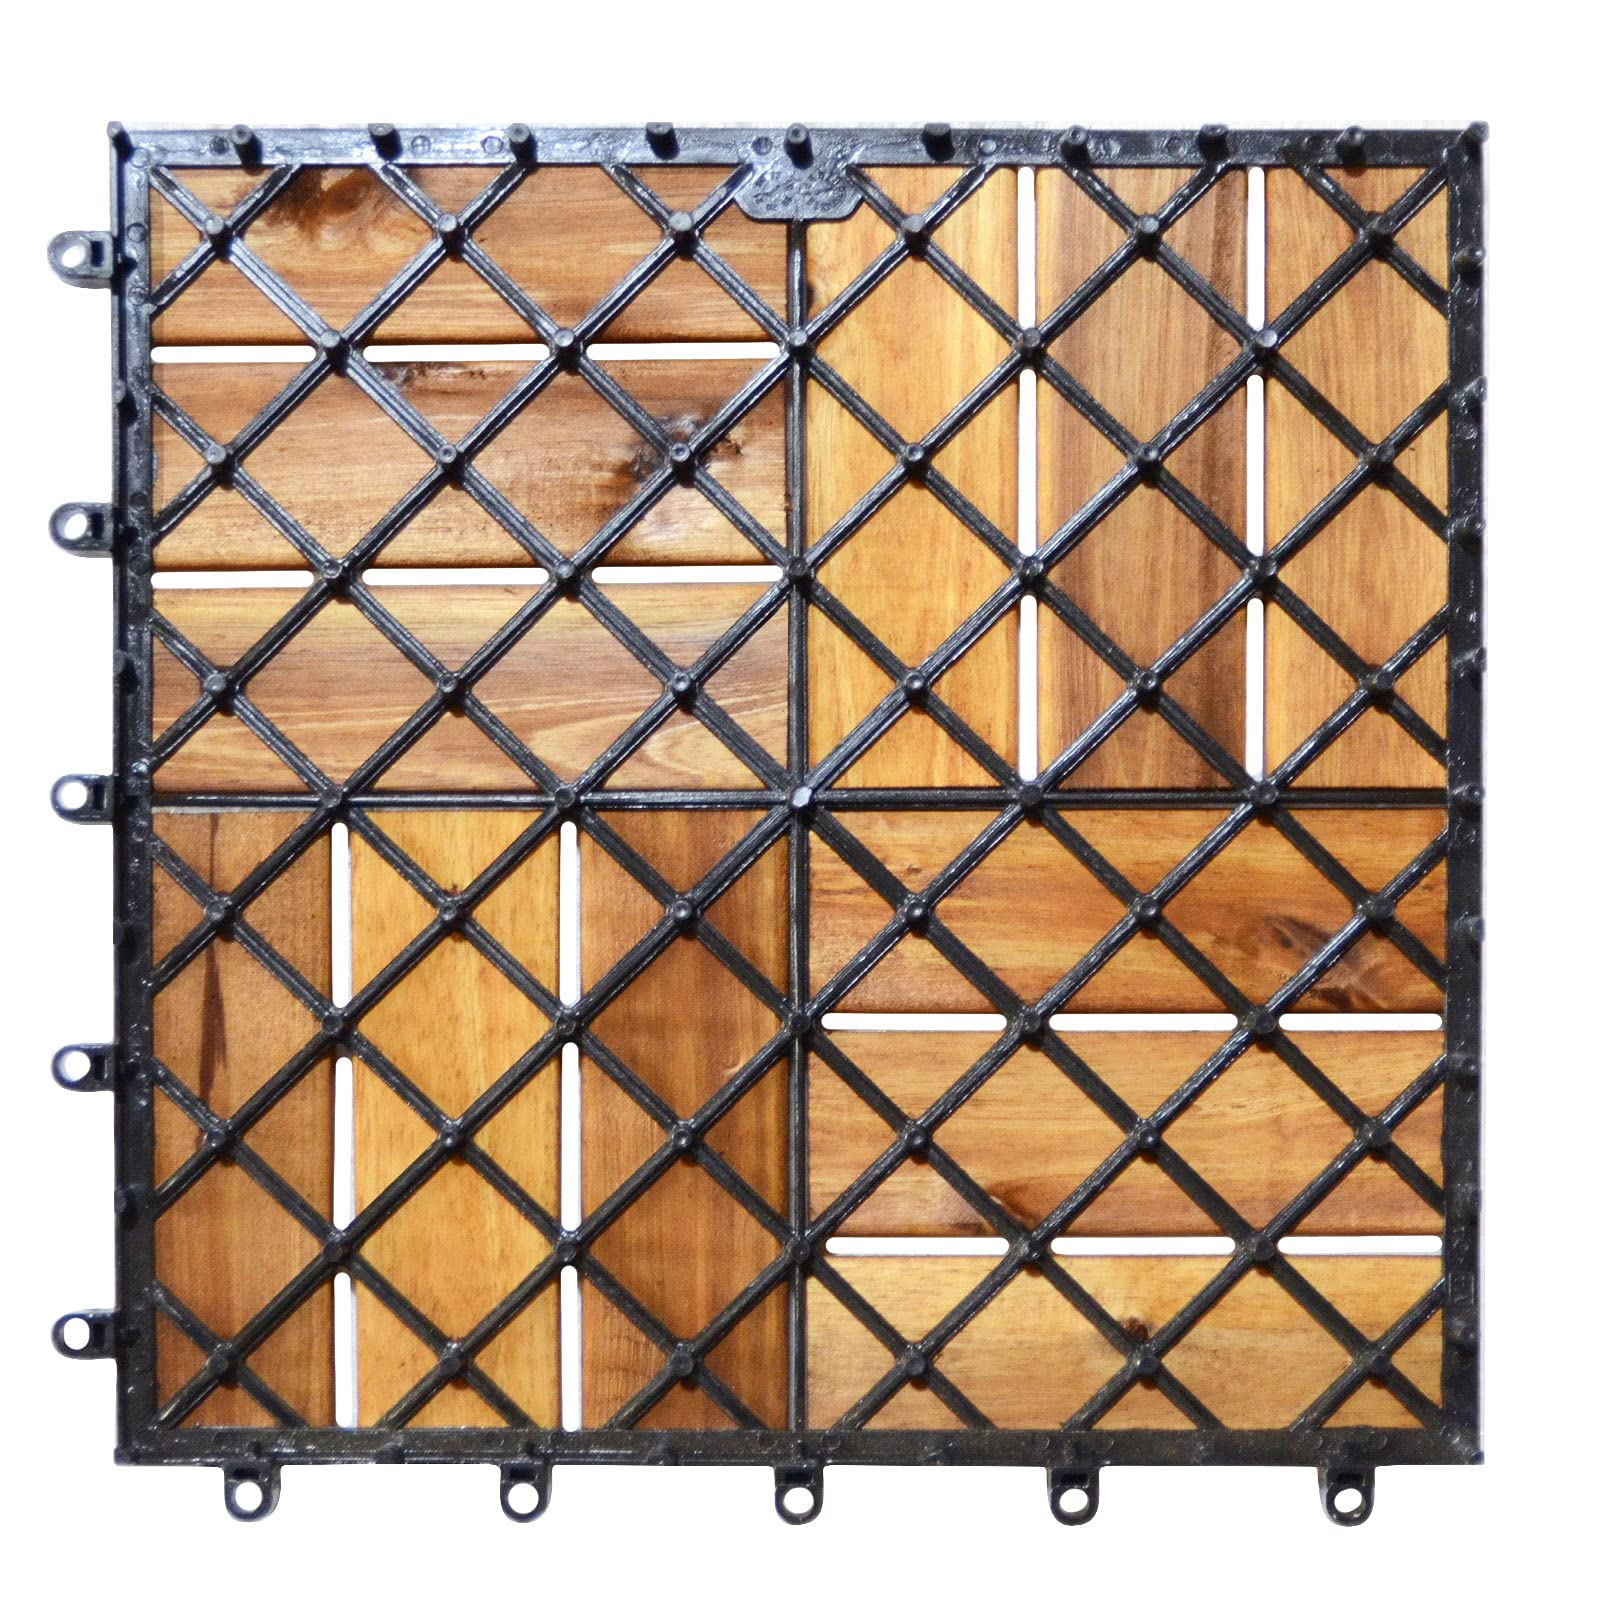 27 PCS Interlocking Patio Deck Tiles - Giantex